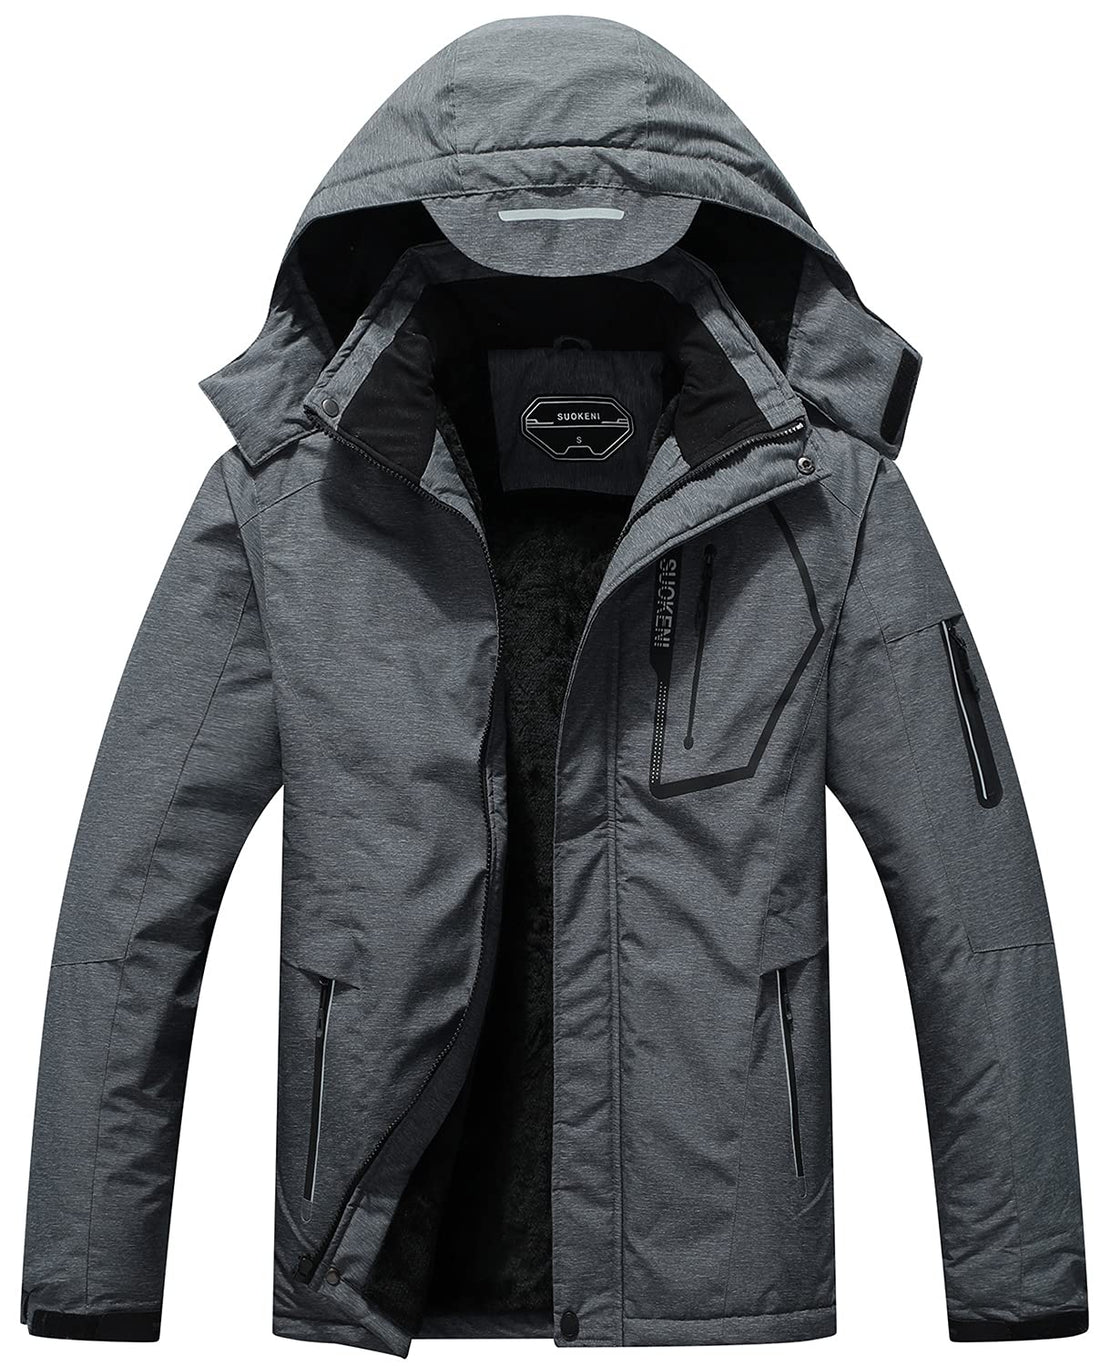 SUOKENI Men's Waterproof Ski Jacket Warm Winter Snow Coat Hooded Raincoat, Charcoal Heather, Small